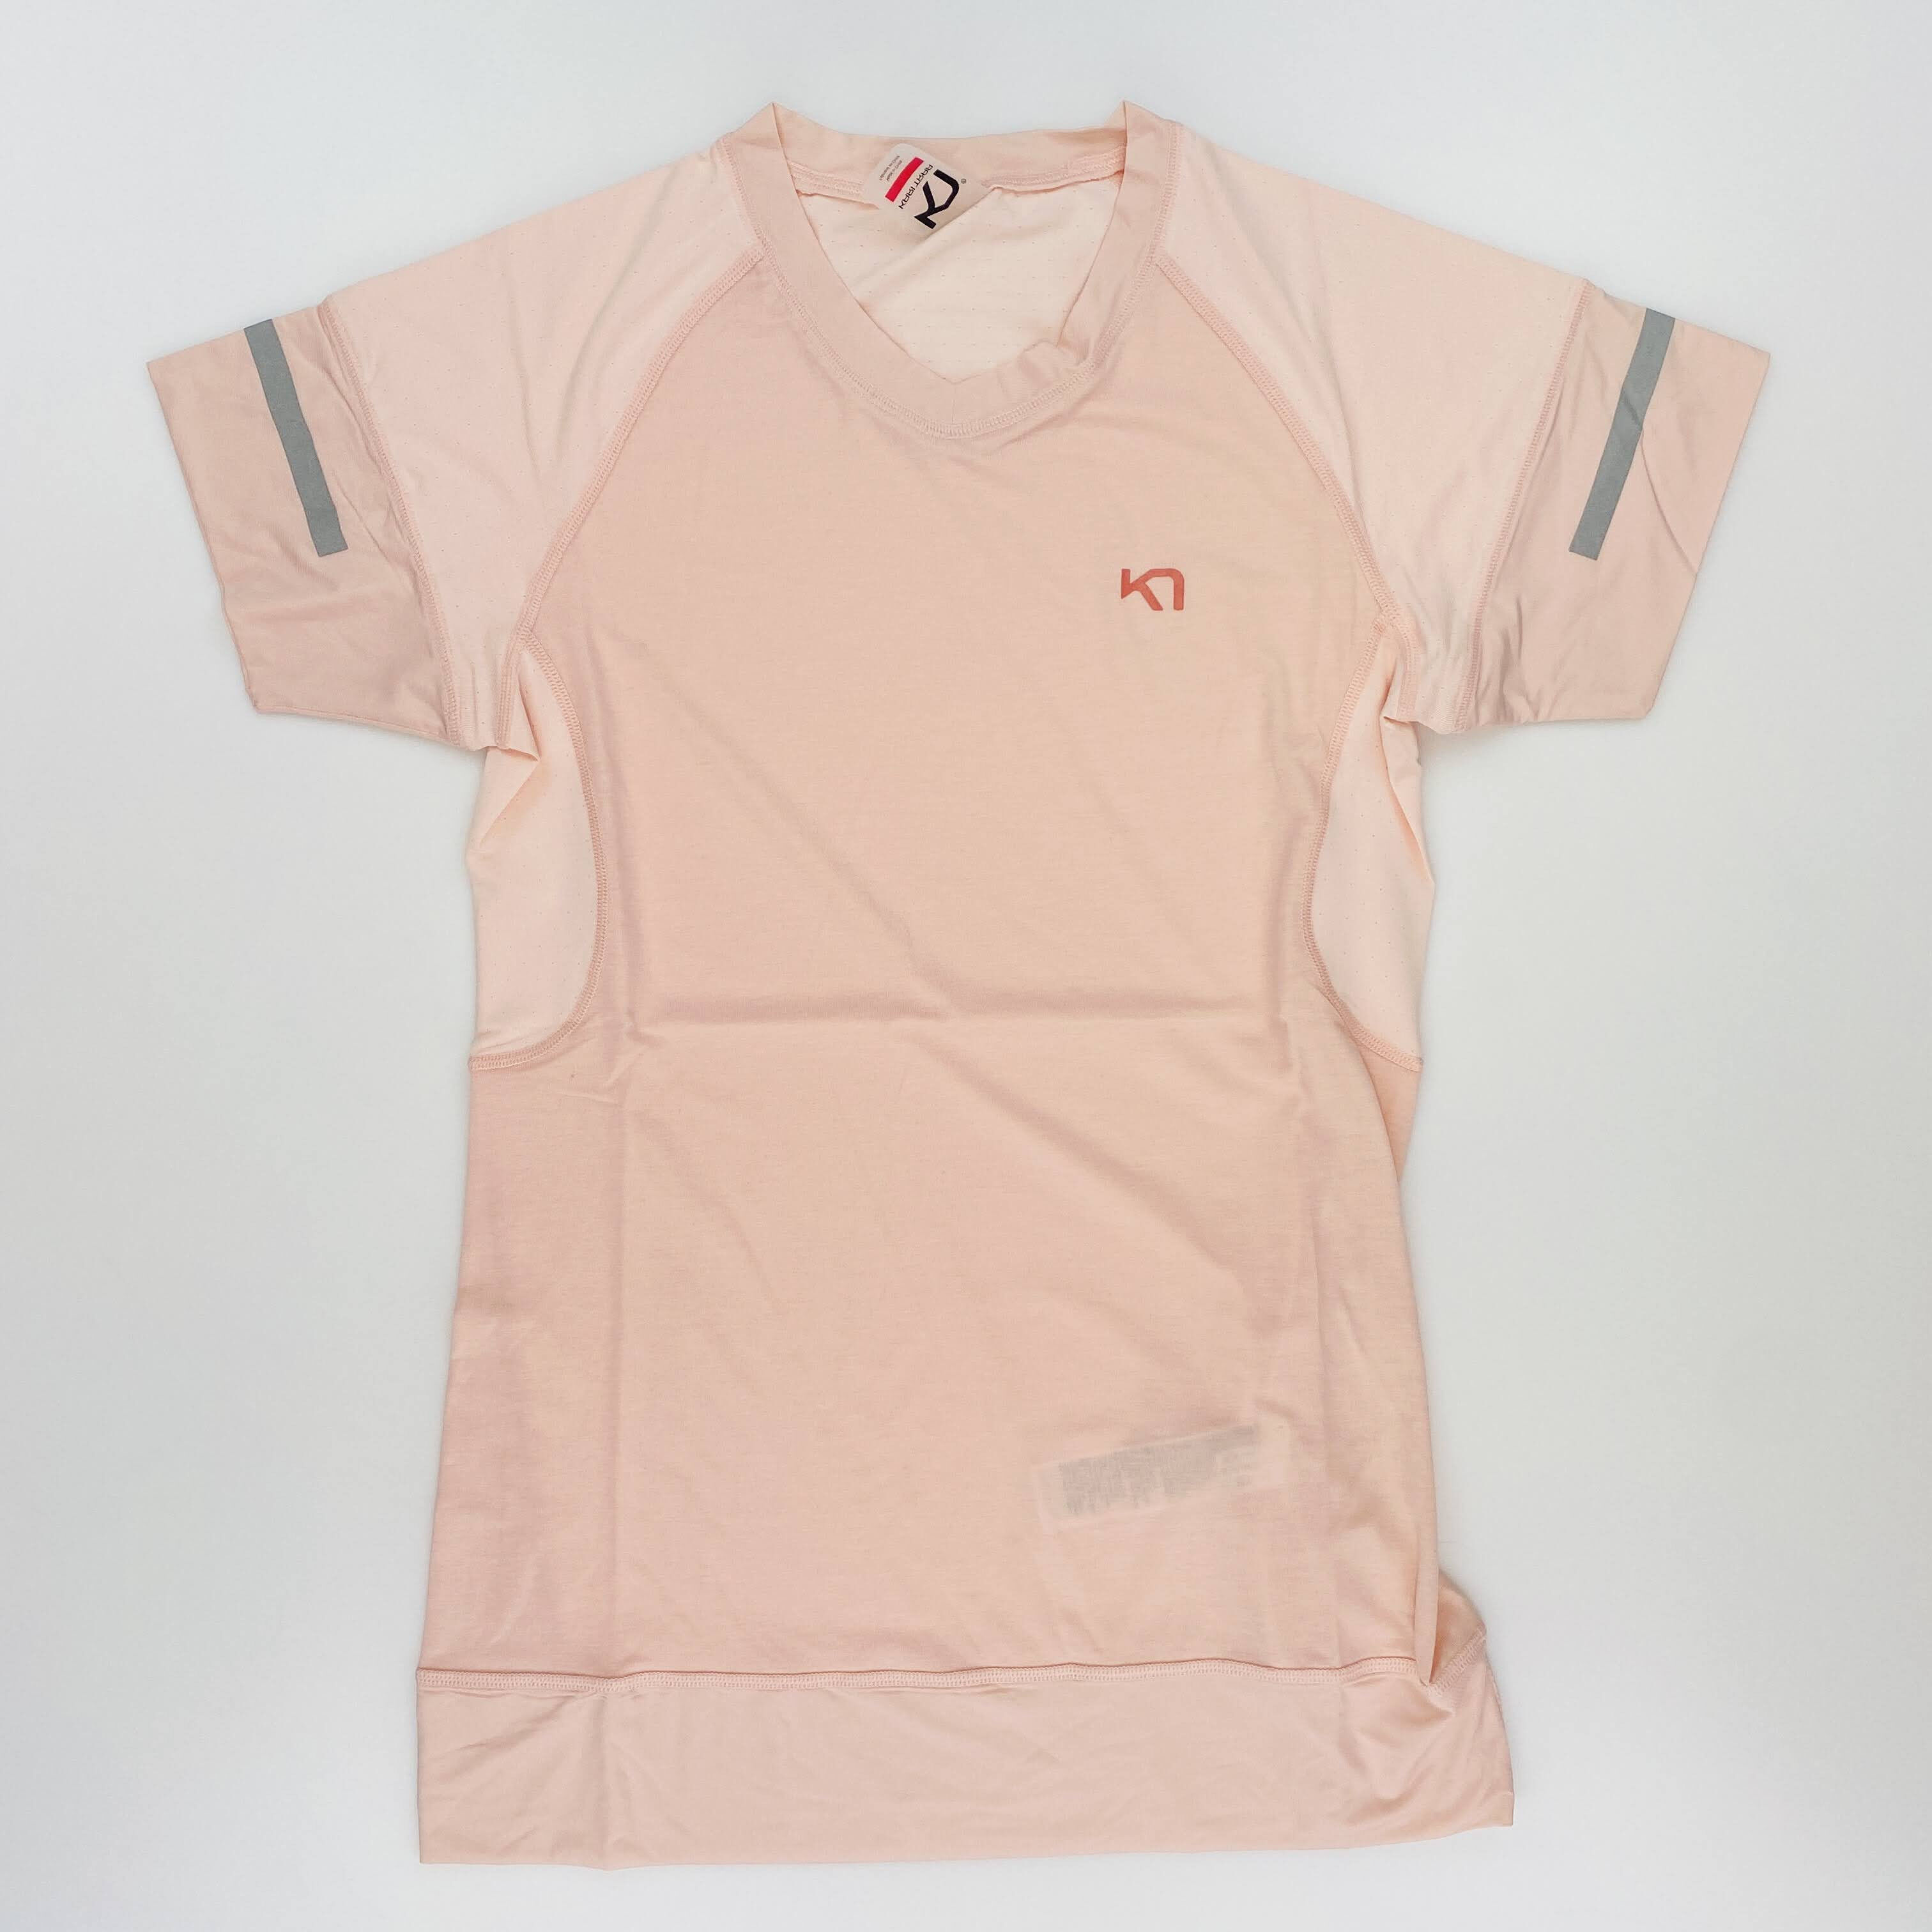 Kari Traa Sigrun Tee - Second Hand T-shirt - Women's - Pink - M | Hardloop